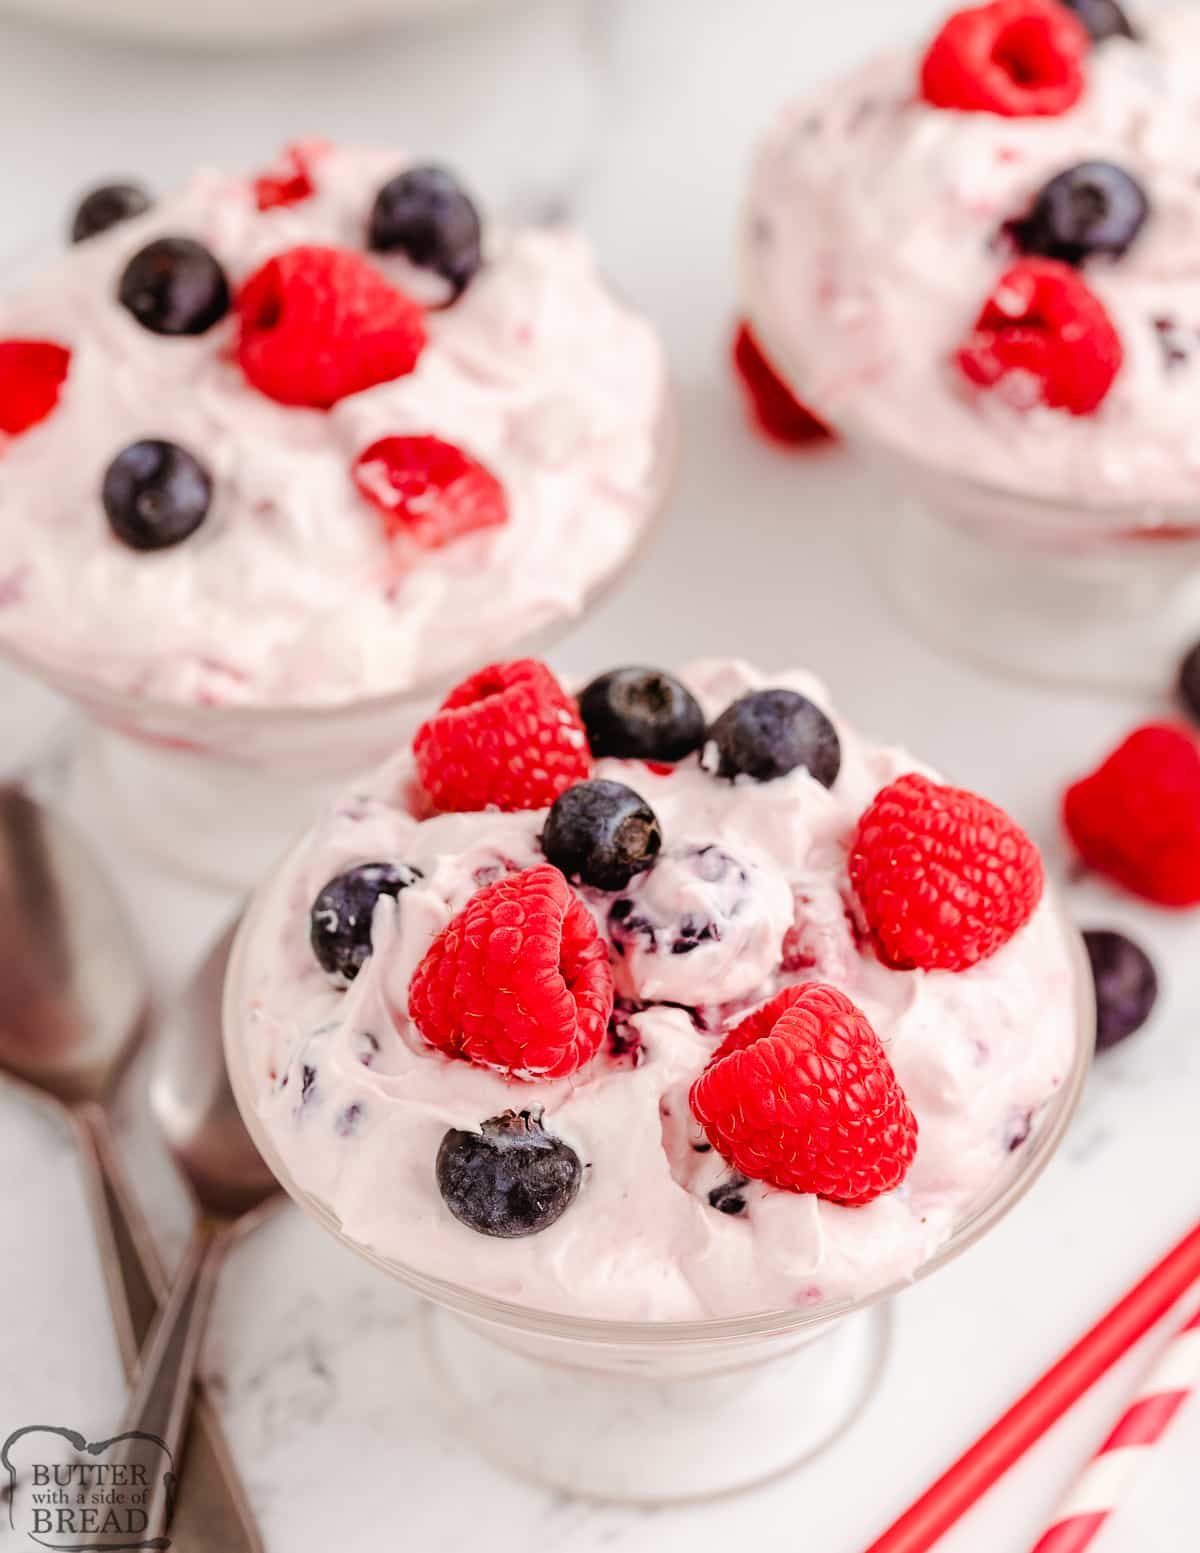 servings of berries and cream salad